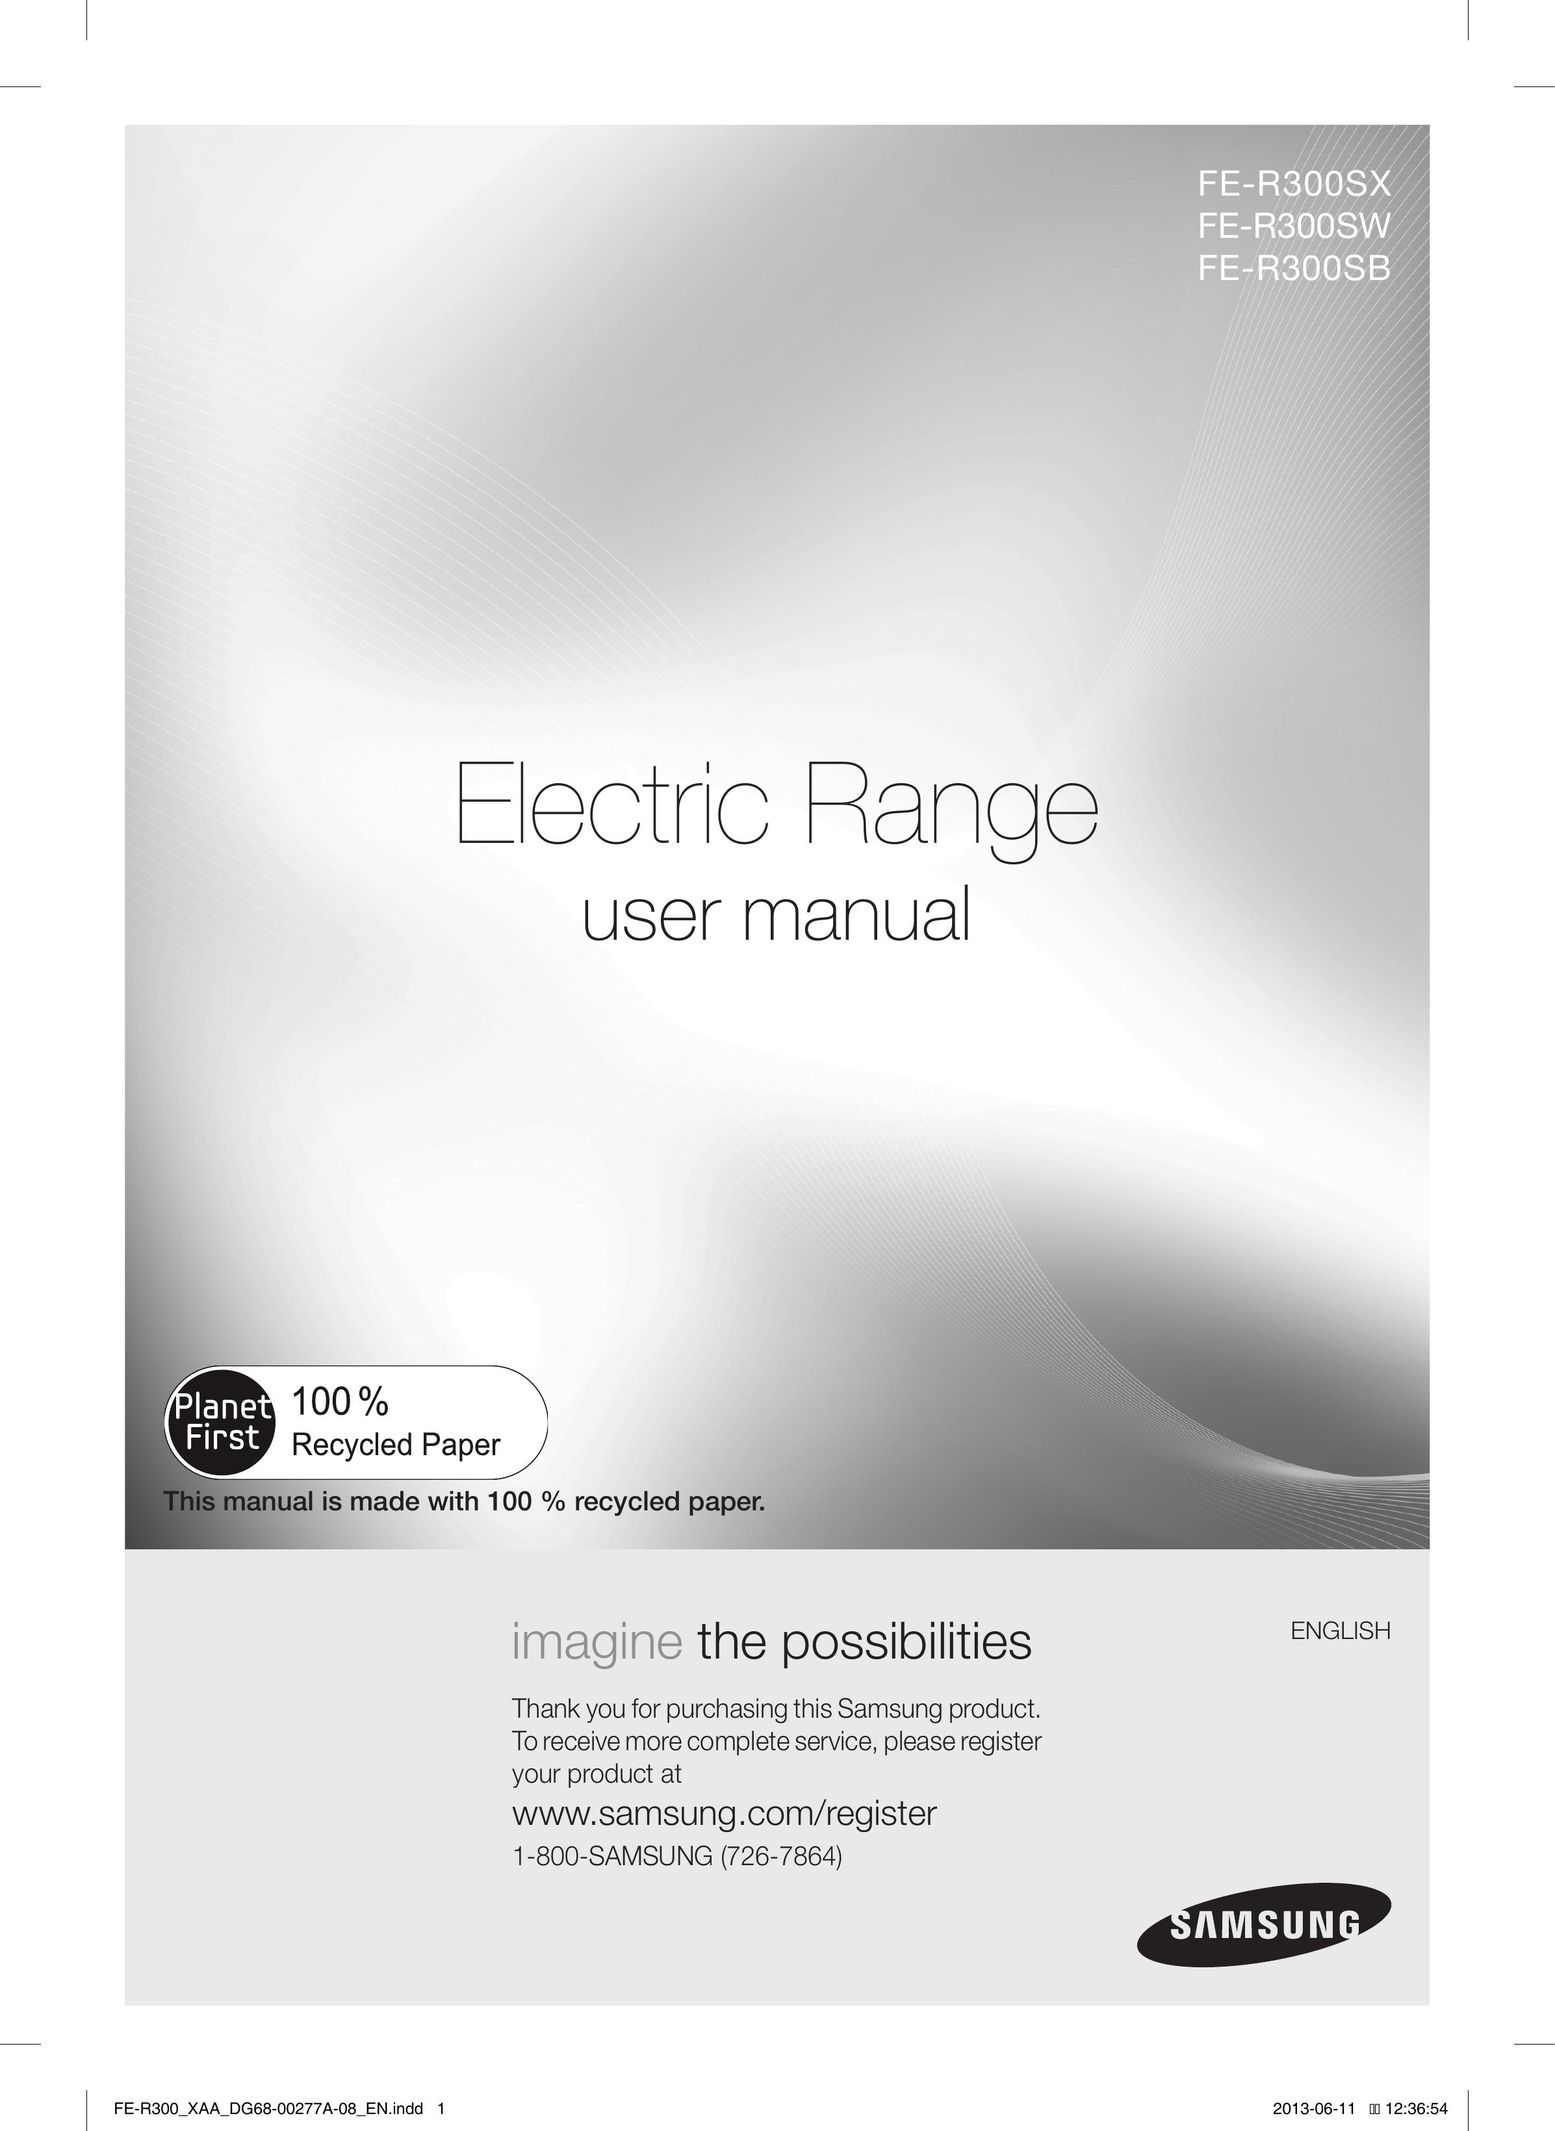 Samsung FER300SB Range User Manual